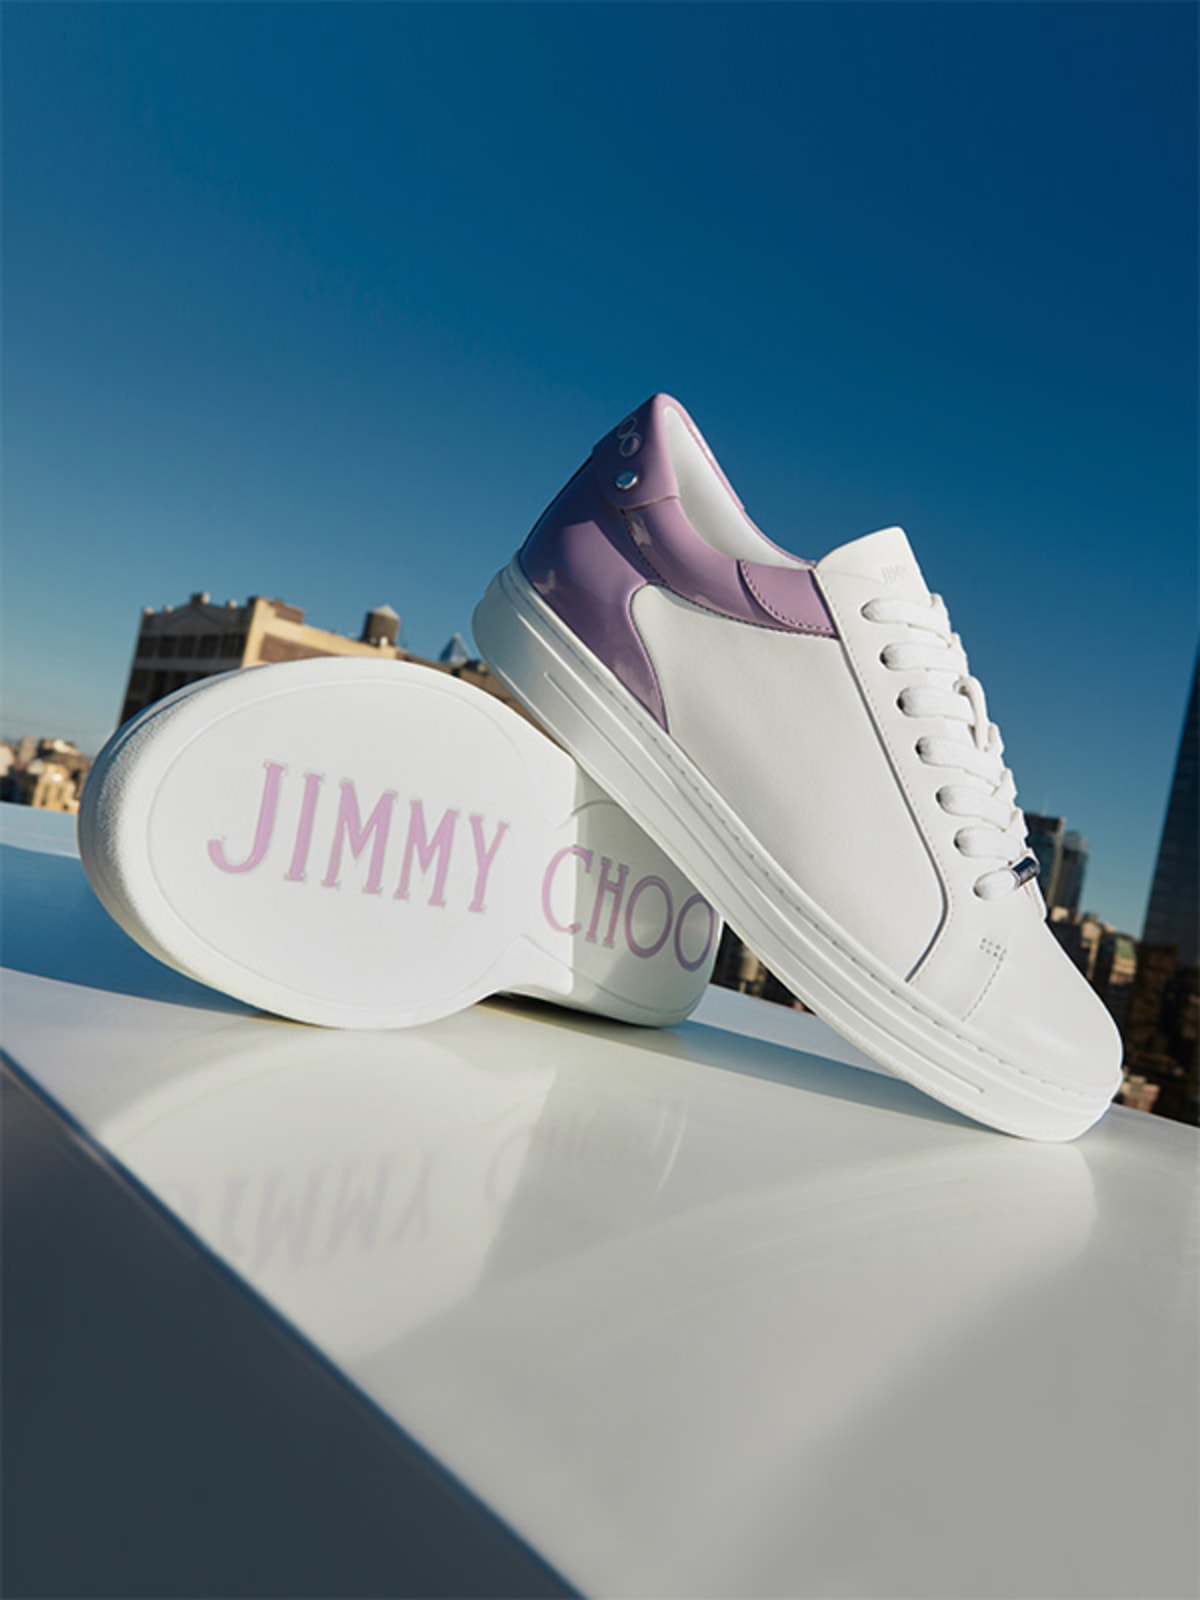 JIMMY CHOO - Official Online Boutique | Shop Luxury Shoes, Bags 